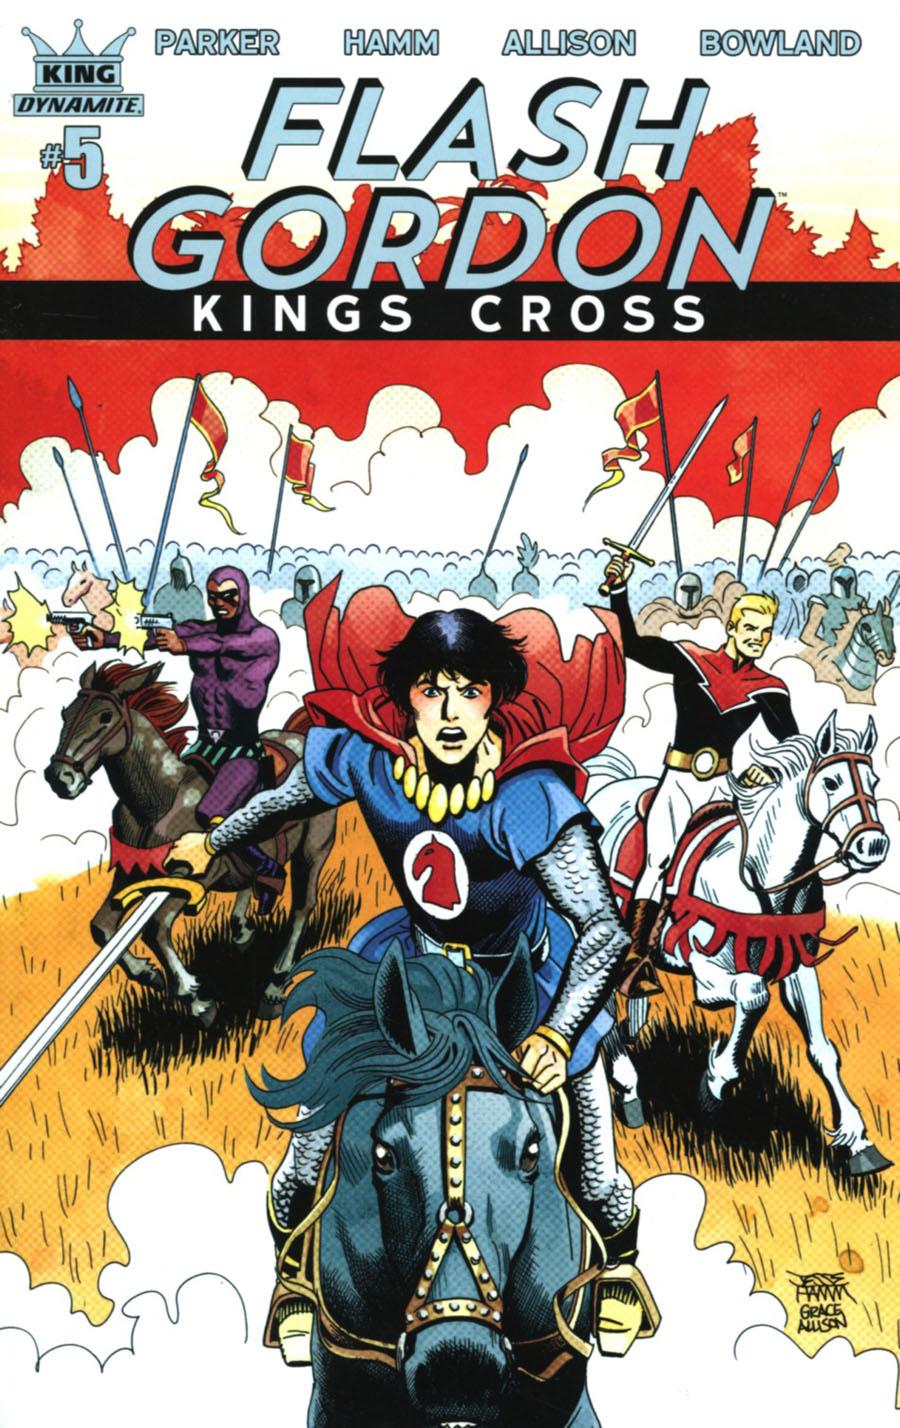 Flash Gordon Kings Cross Vol. 1 #5